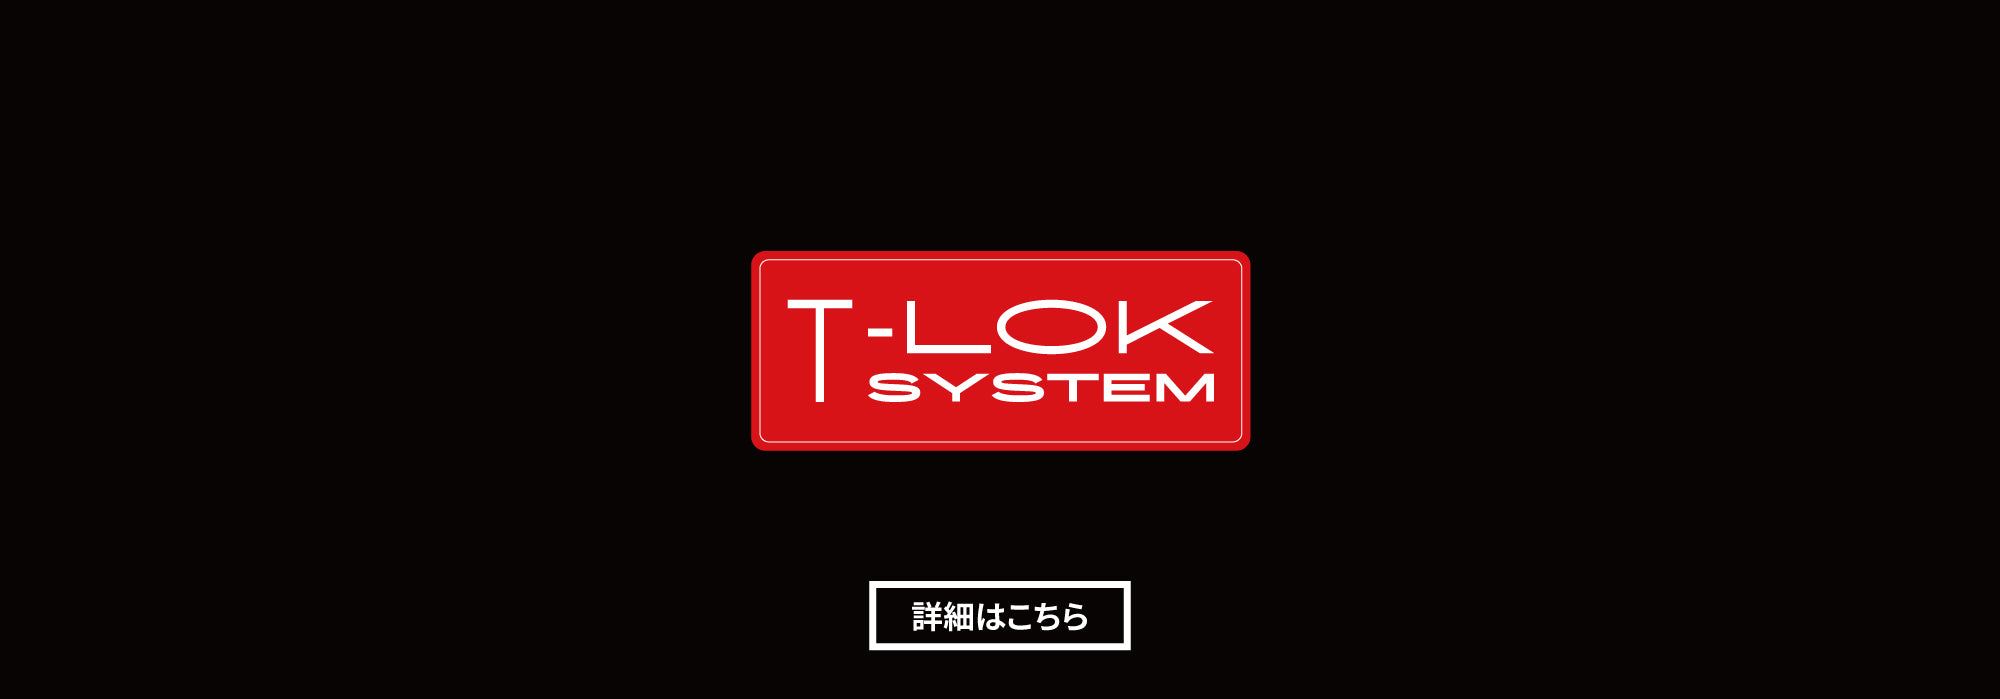 T-LOK SYSTEM IMG